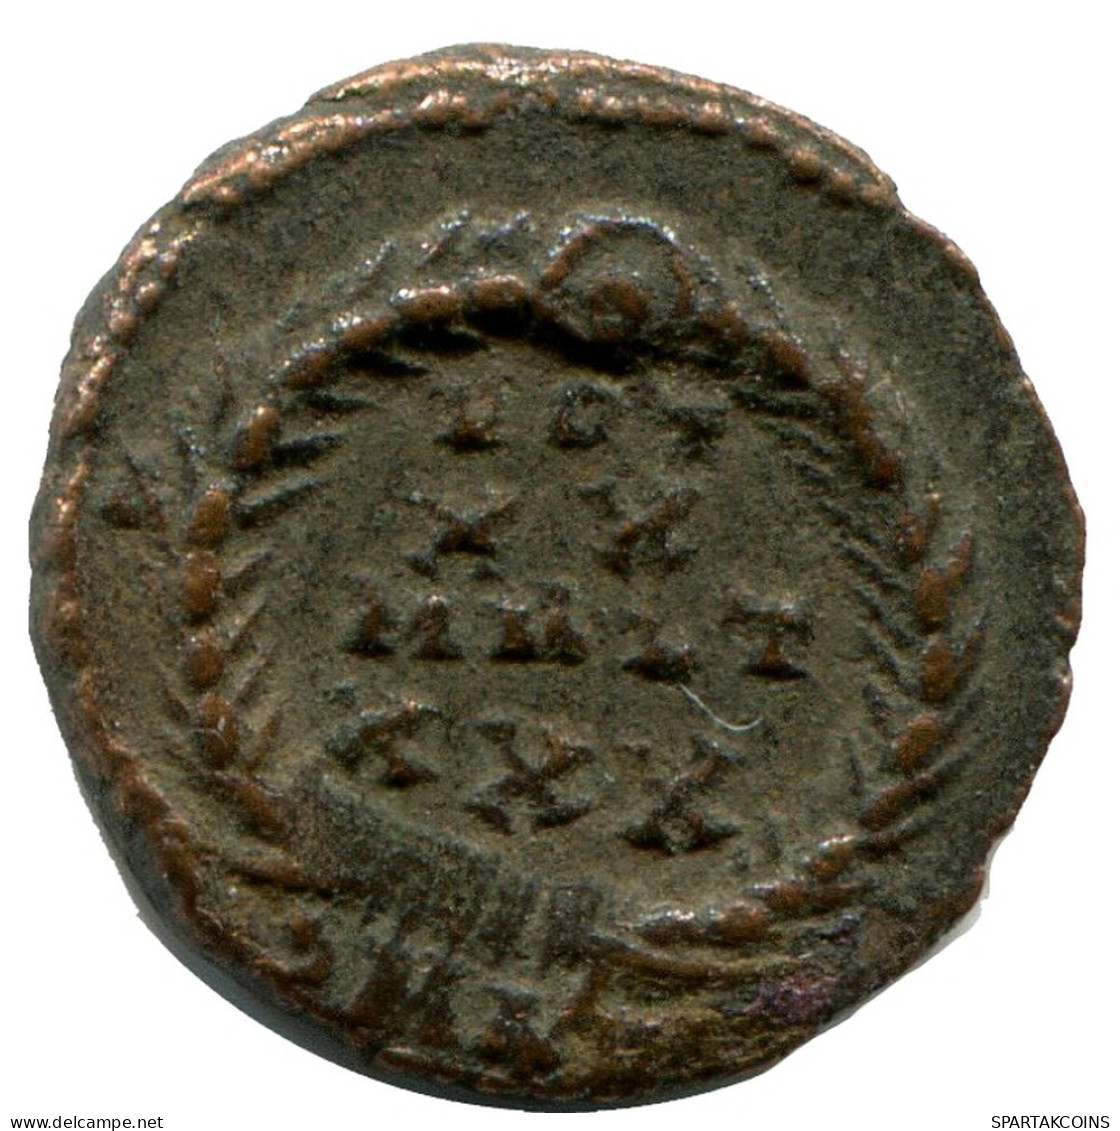 CONSTANTIUS II ALEKSANDRIA FROM THE ROYAL ONTARIO MUSEUM #ANC10497.14.U.A - Der Christlischen Kaiser (307 / 363)